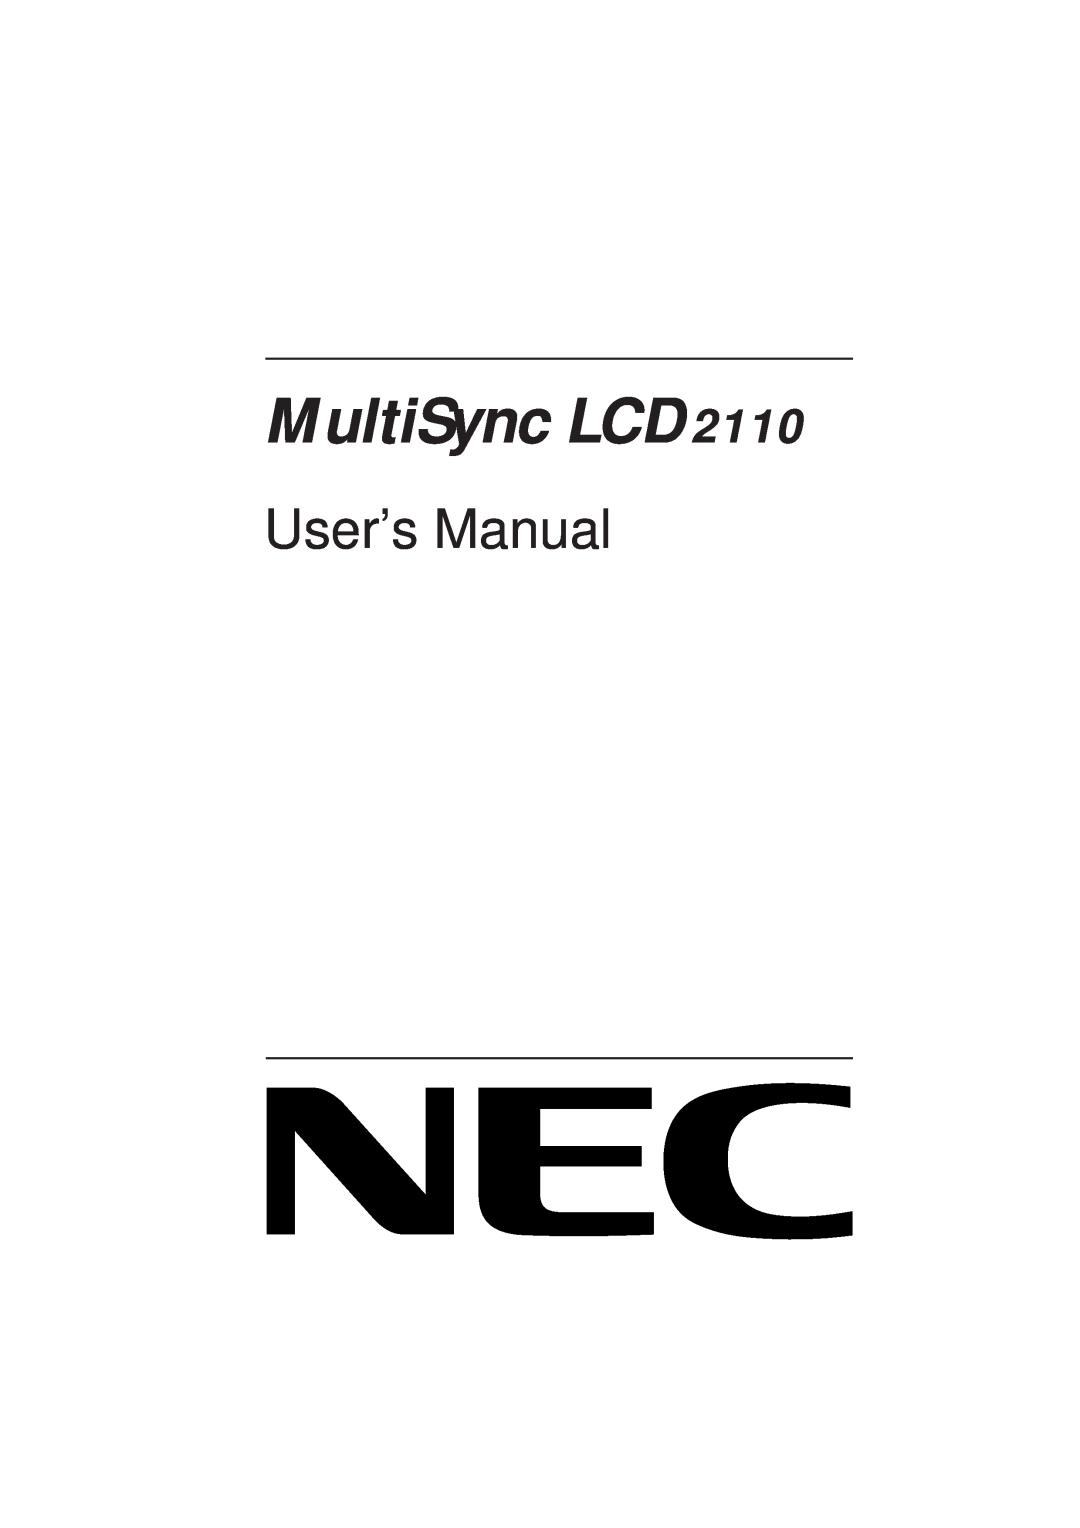 NEC user manual MultiSync LCD2110, User’s Manual 